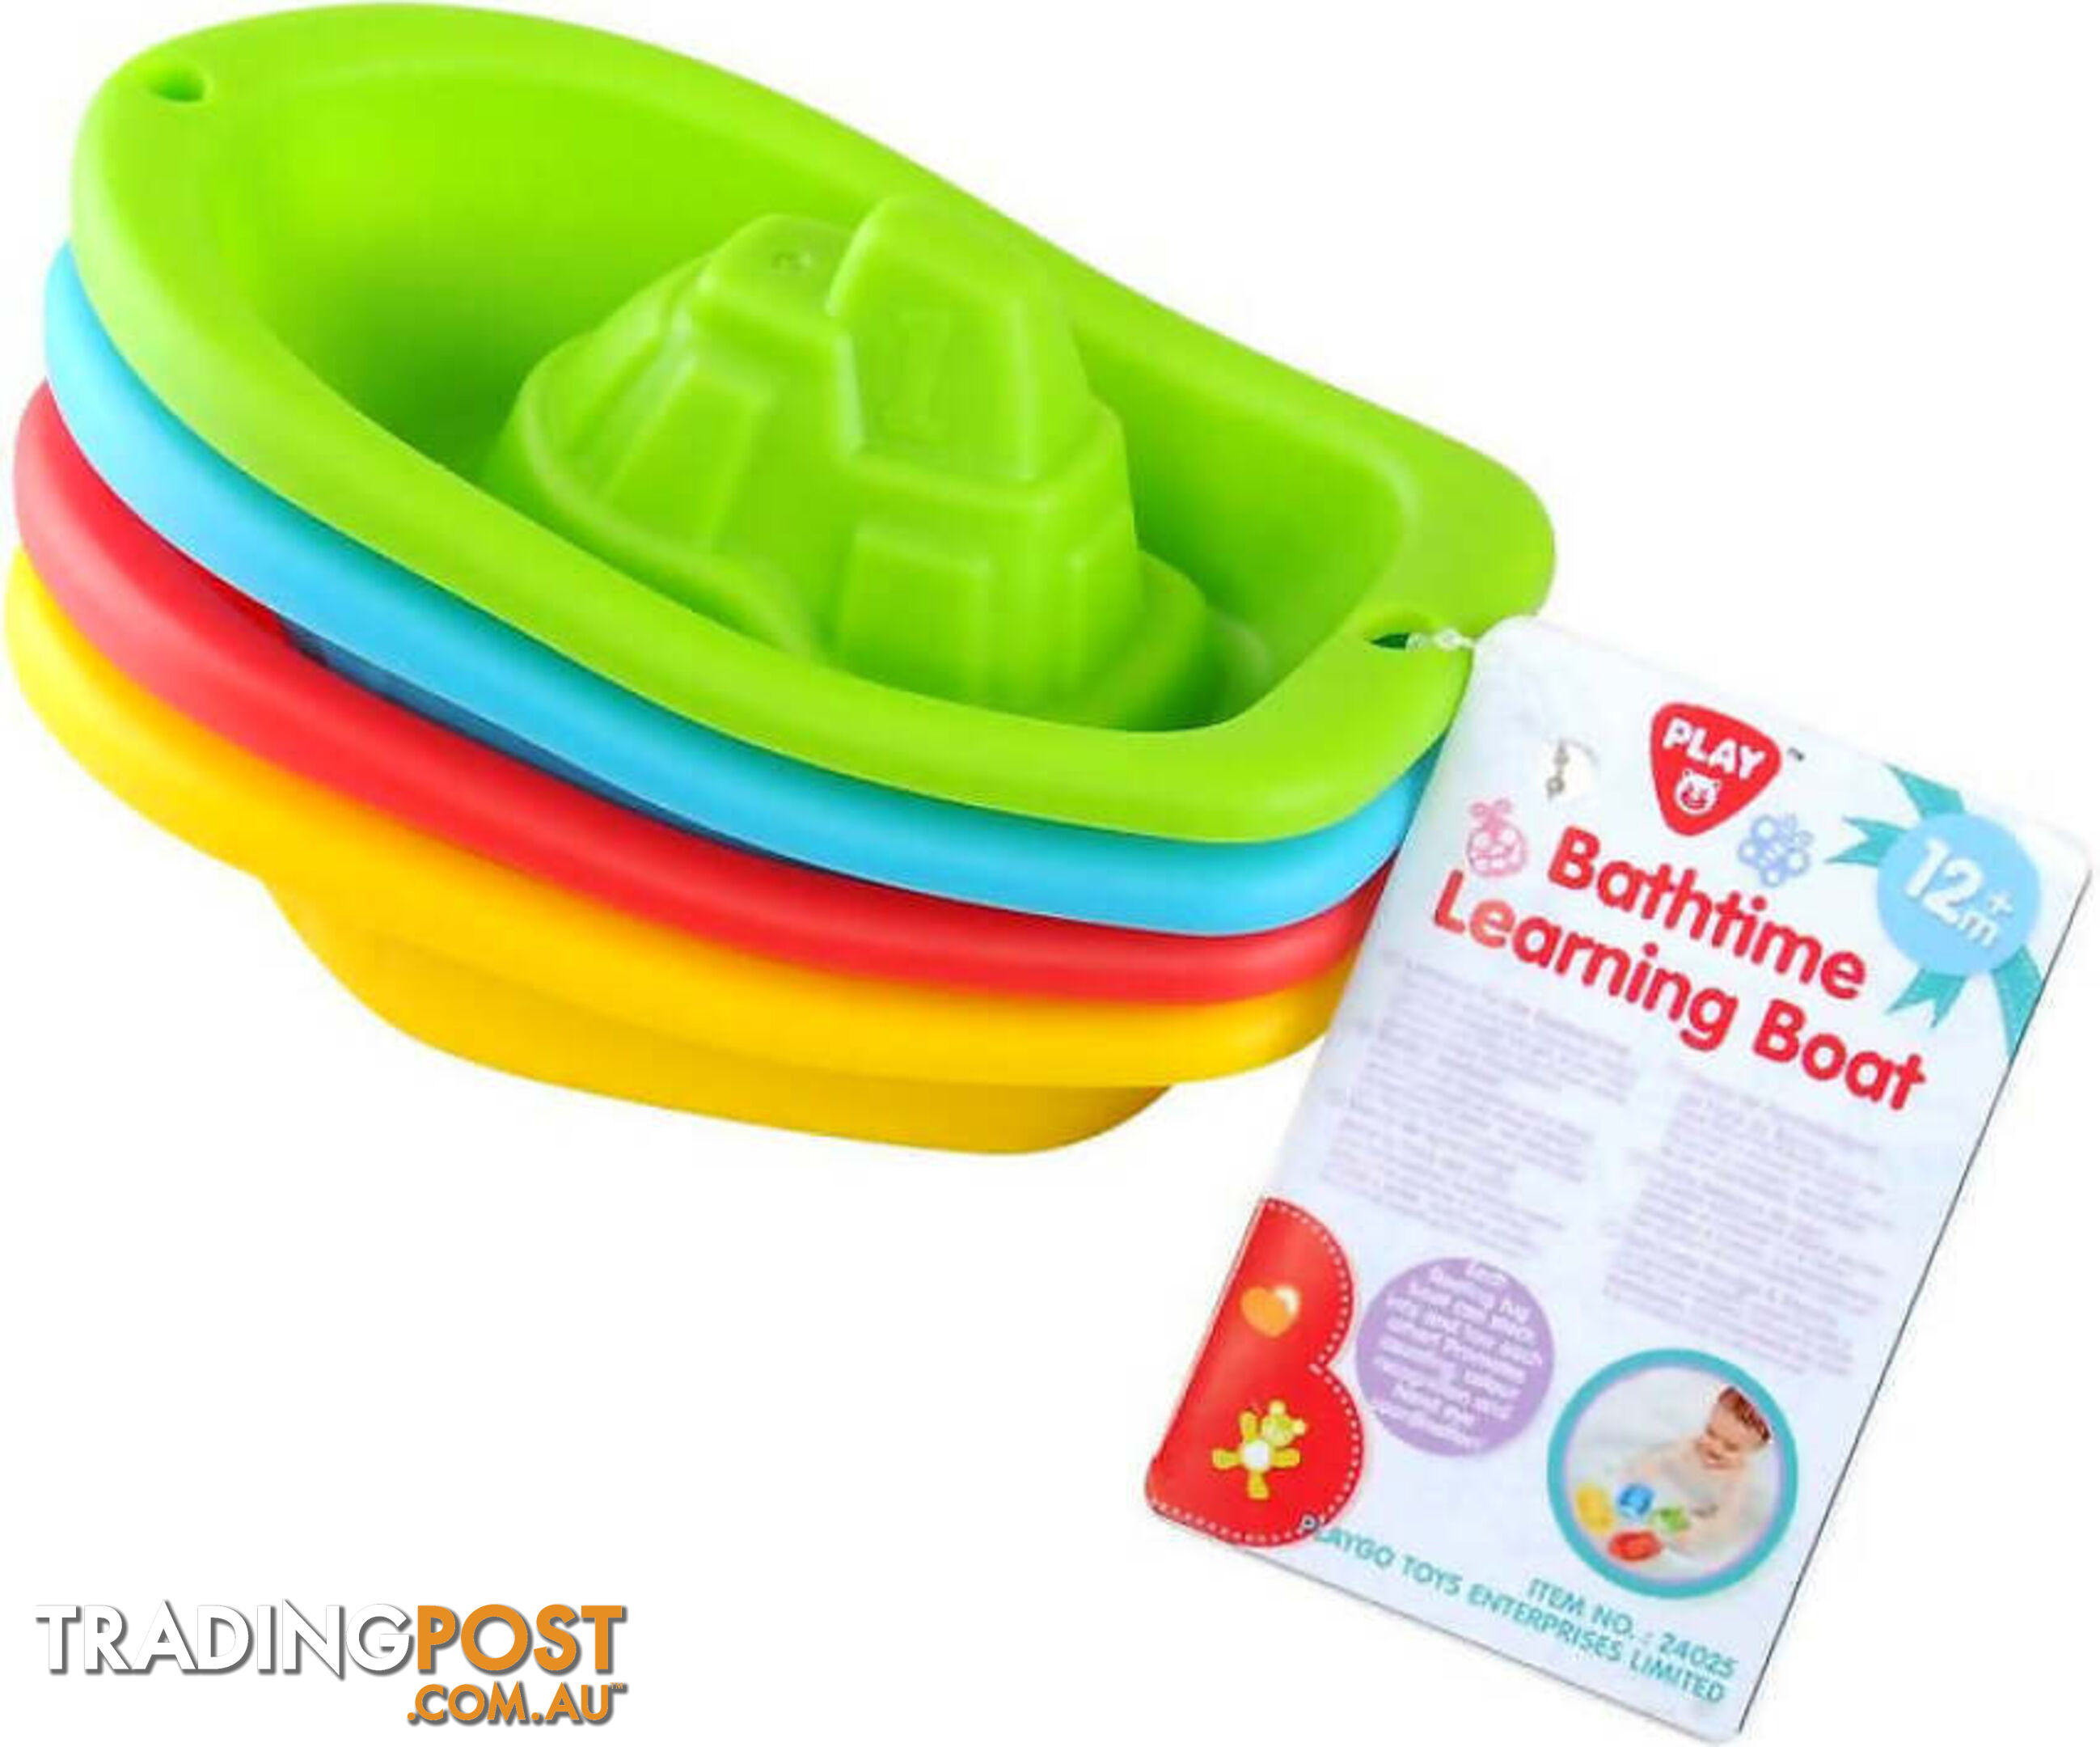 Playgo Toys Ent. Ltd. - Bathtime Learning Boat - Art64844 - 4892401240255